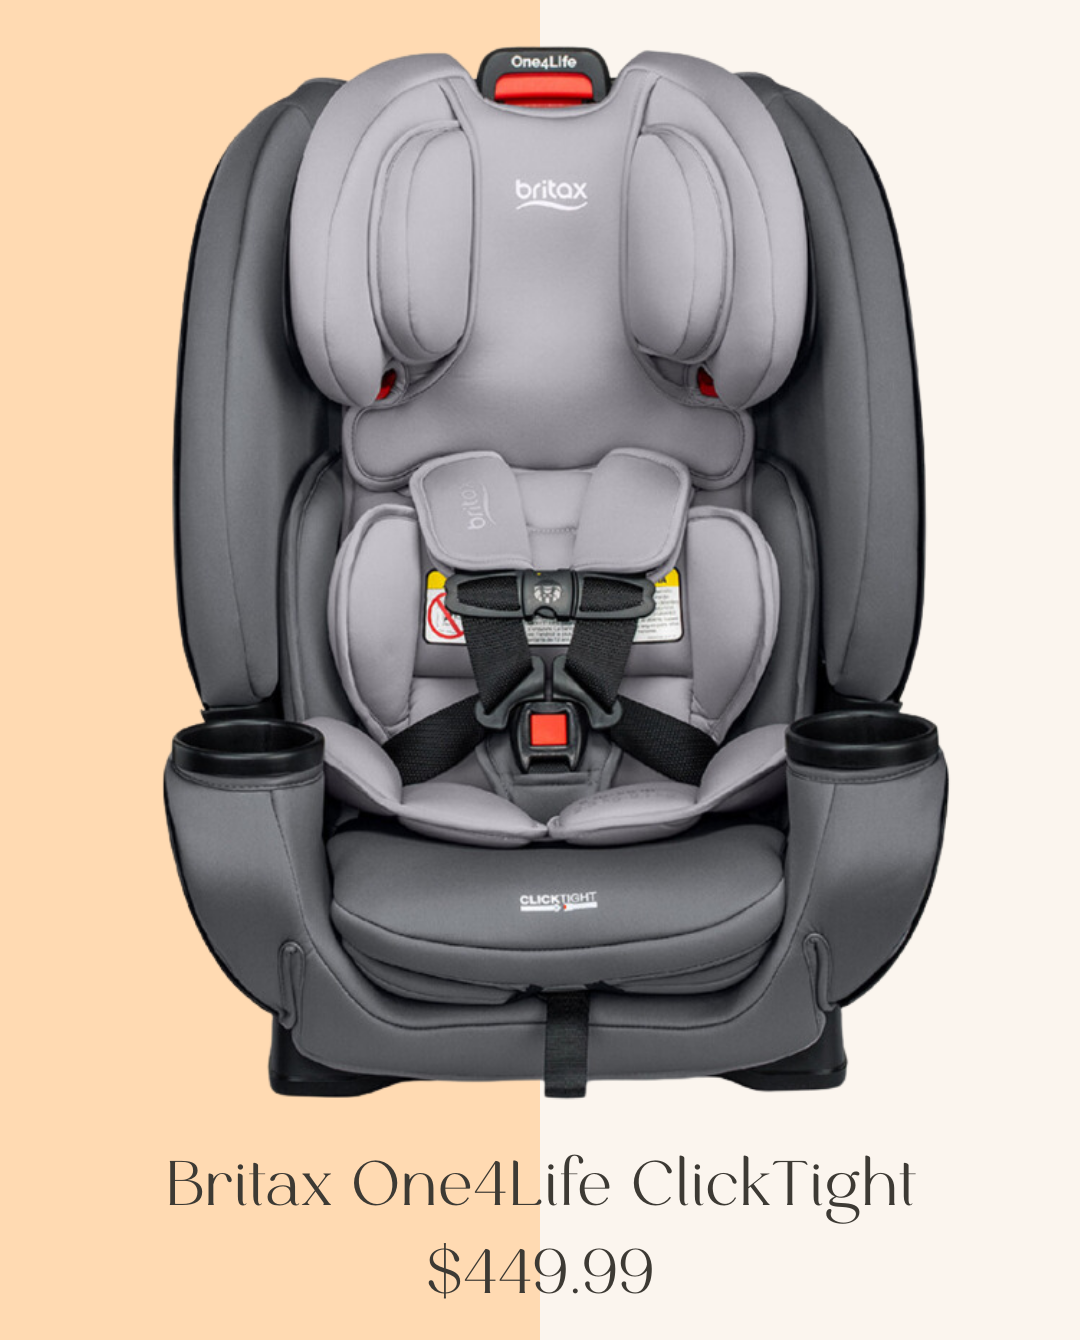 Top Parent Picks: The 6 Best Toddler Car Seats - Britax One4Life ClickTight